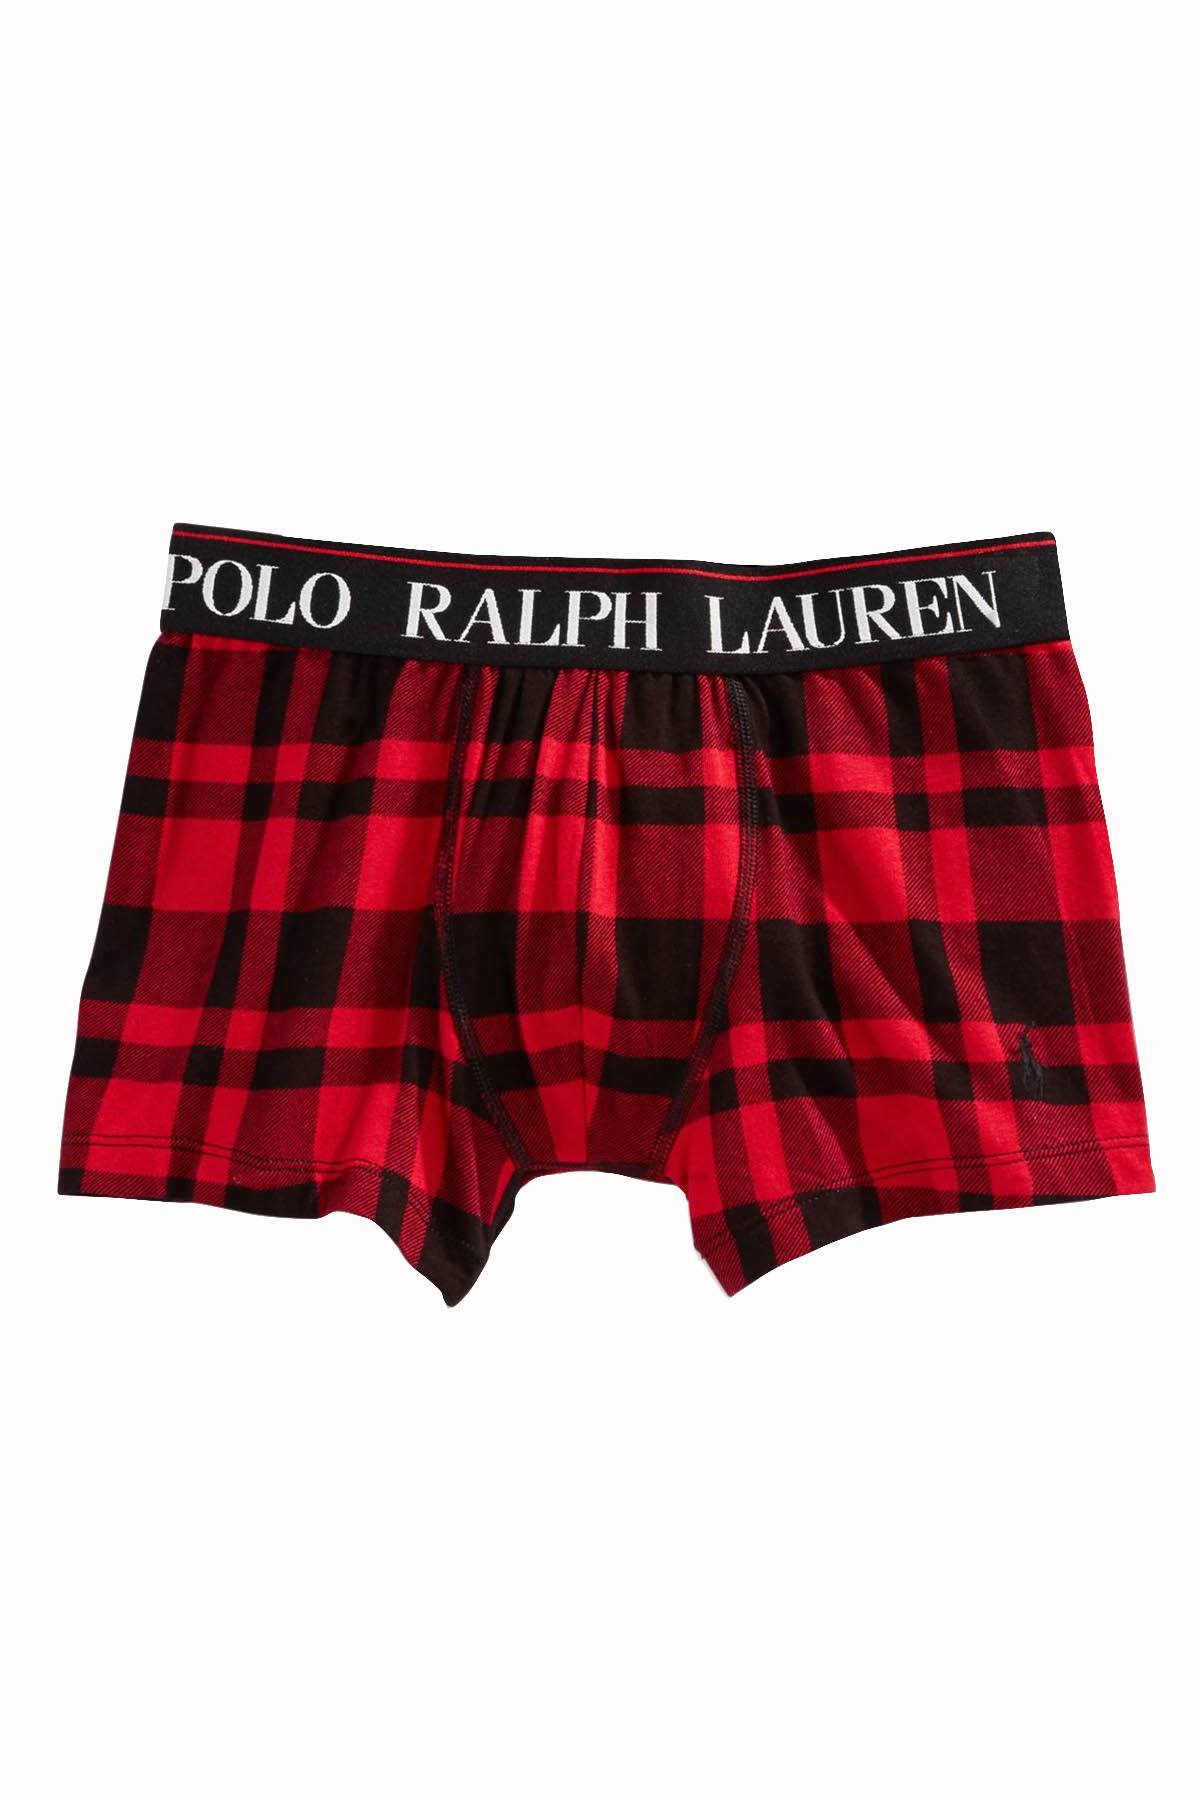 Polo Ralph Lauren Red/Black Plaid Boxer Brief